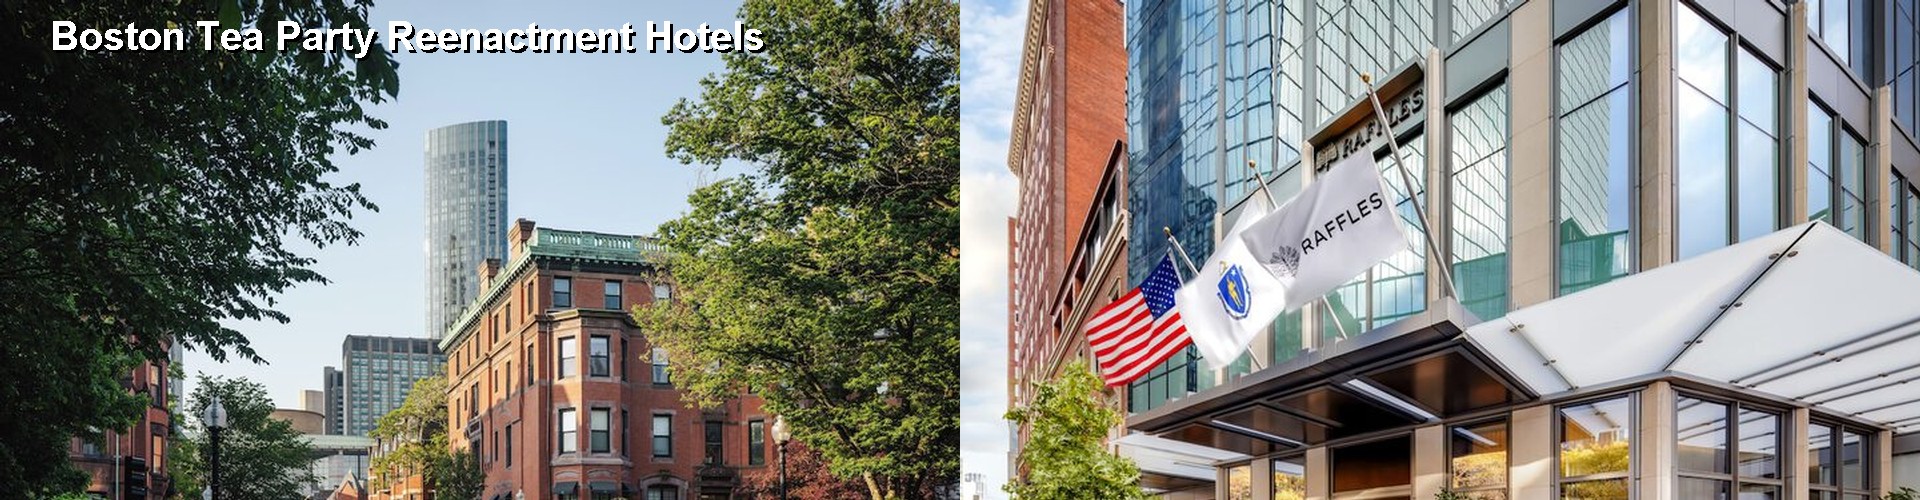 5 Best Hotels near Boston Tea Party Reenactment